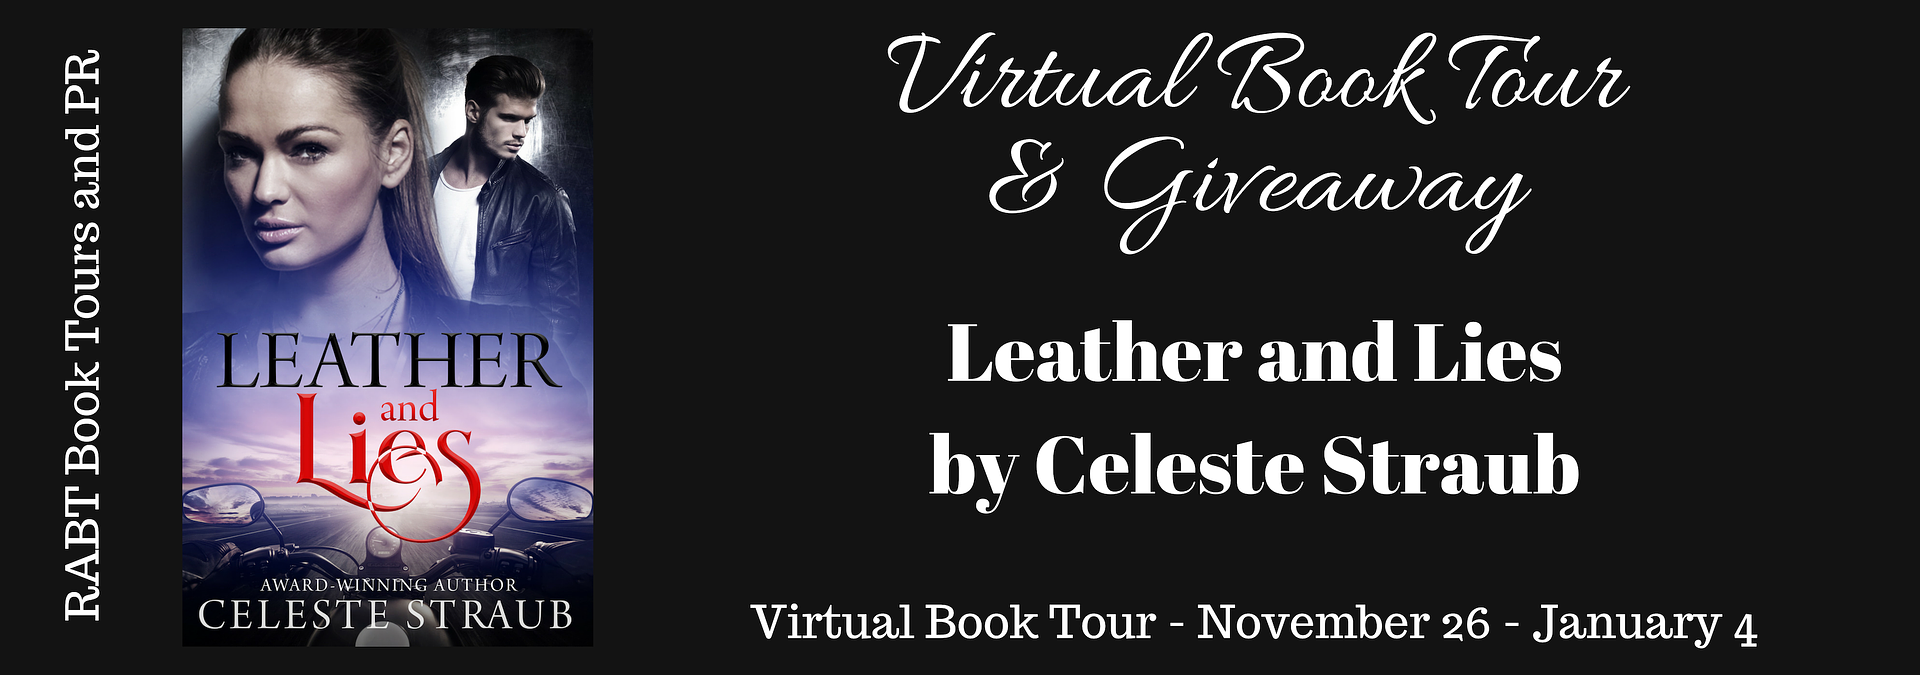 Virtual Book Tour: Leather and Lies by Celeste Straub @AuthorCStraub #romanticsuspense #interview #giveaway @RABTBookTours